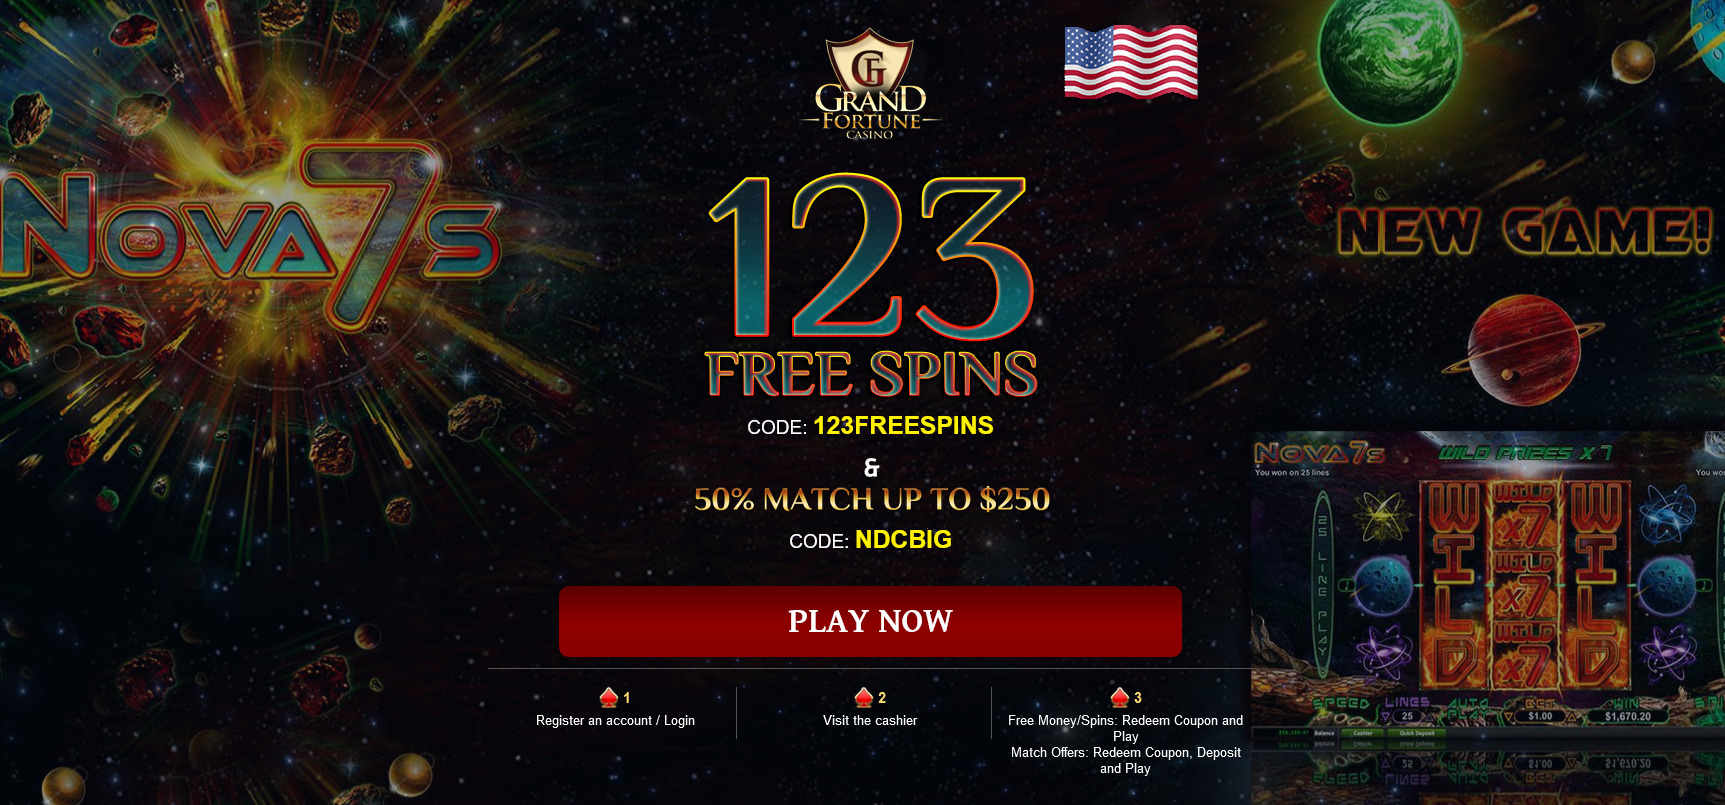 Nova7s | 123 Free Spins